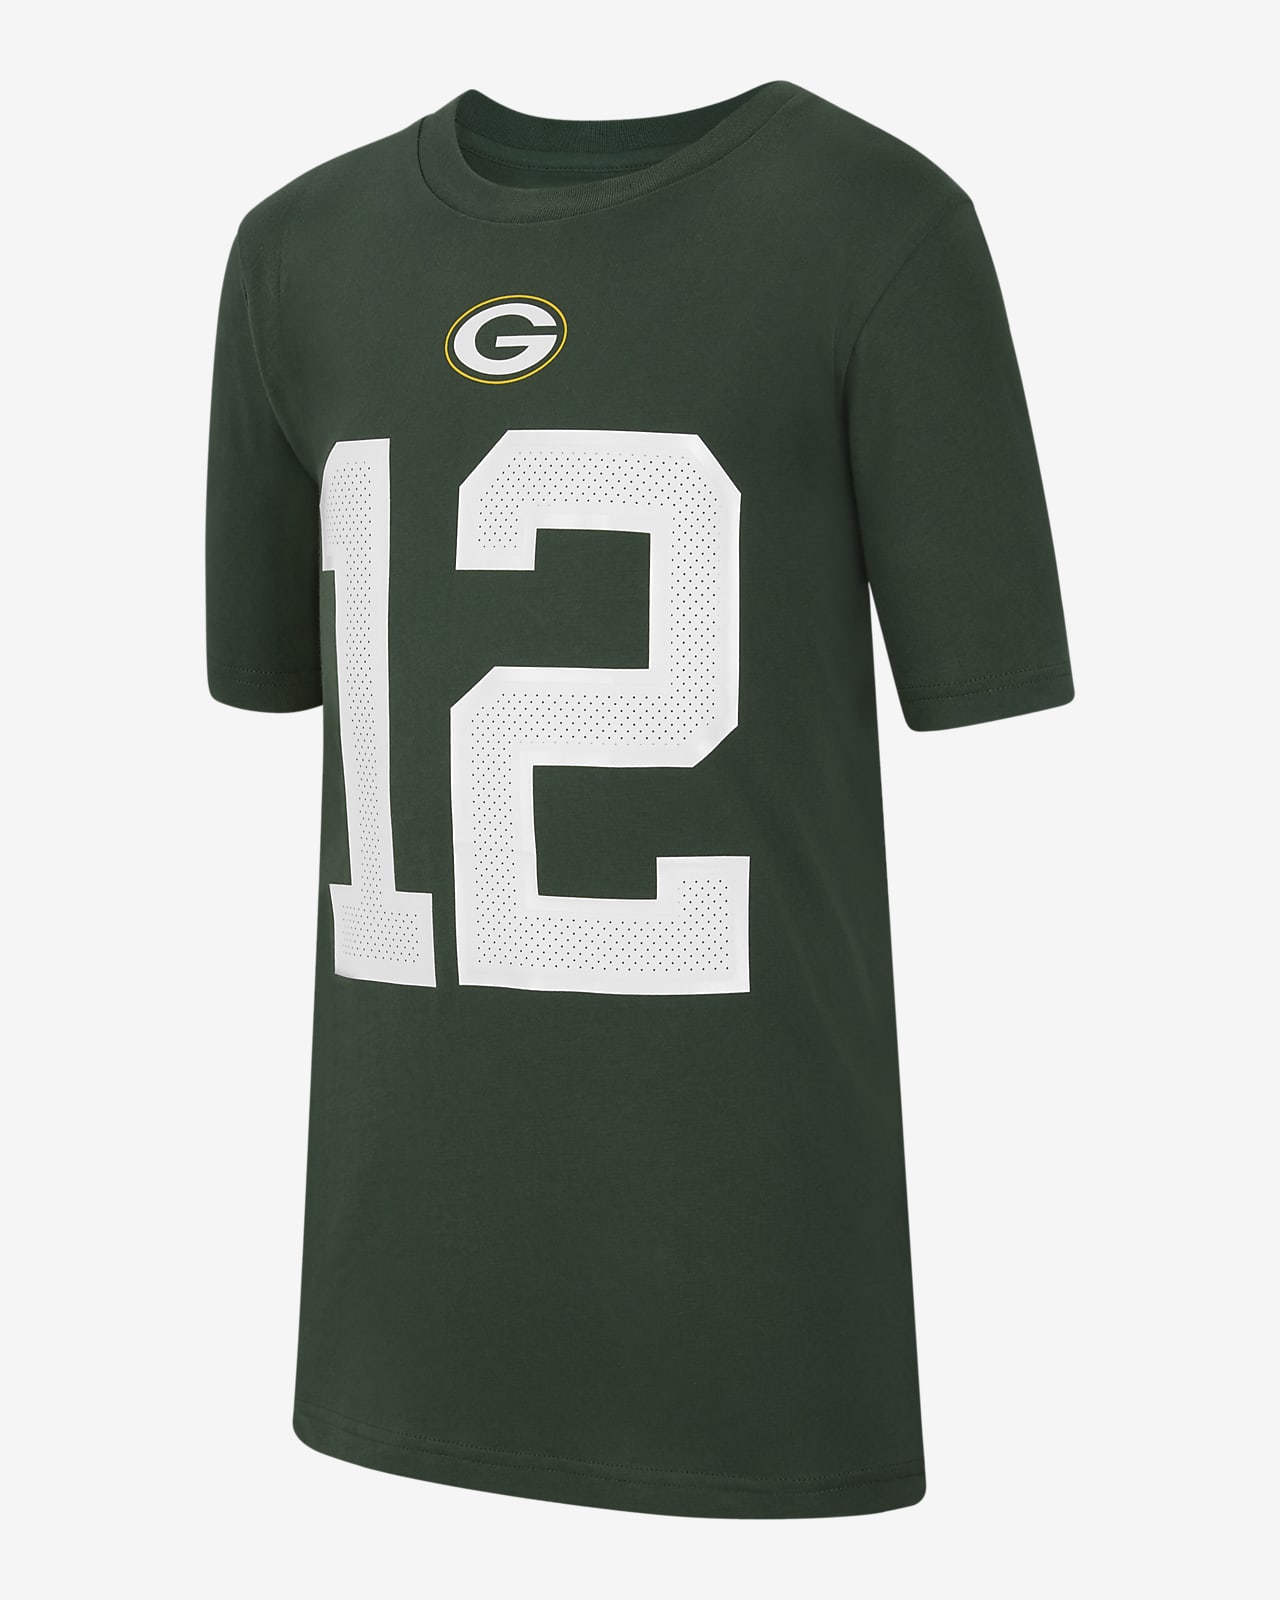 Nike (NFL Green Bay Packers) T-Shirt für ältere Kinder